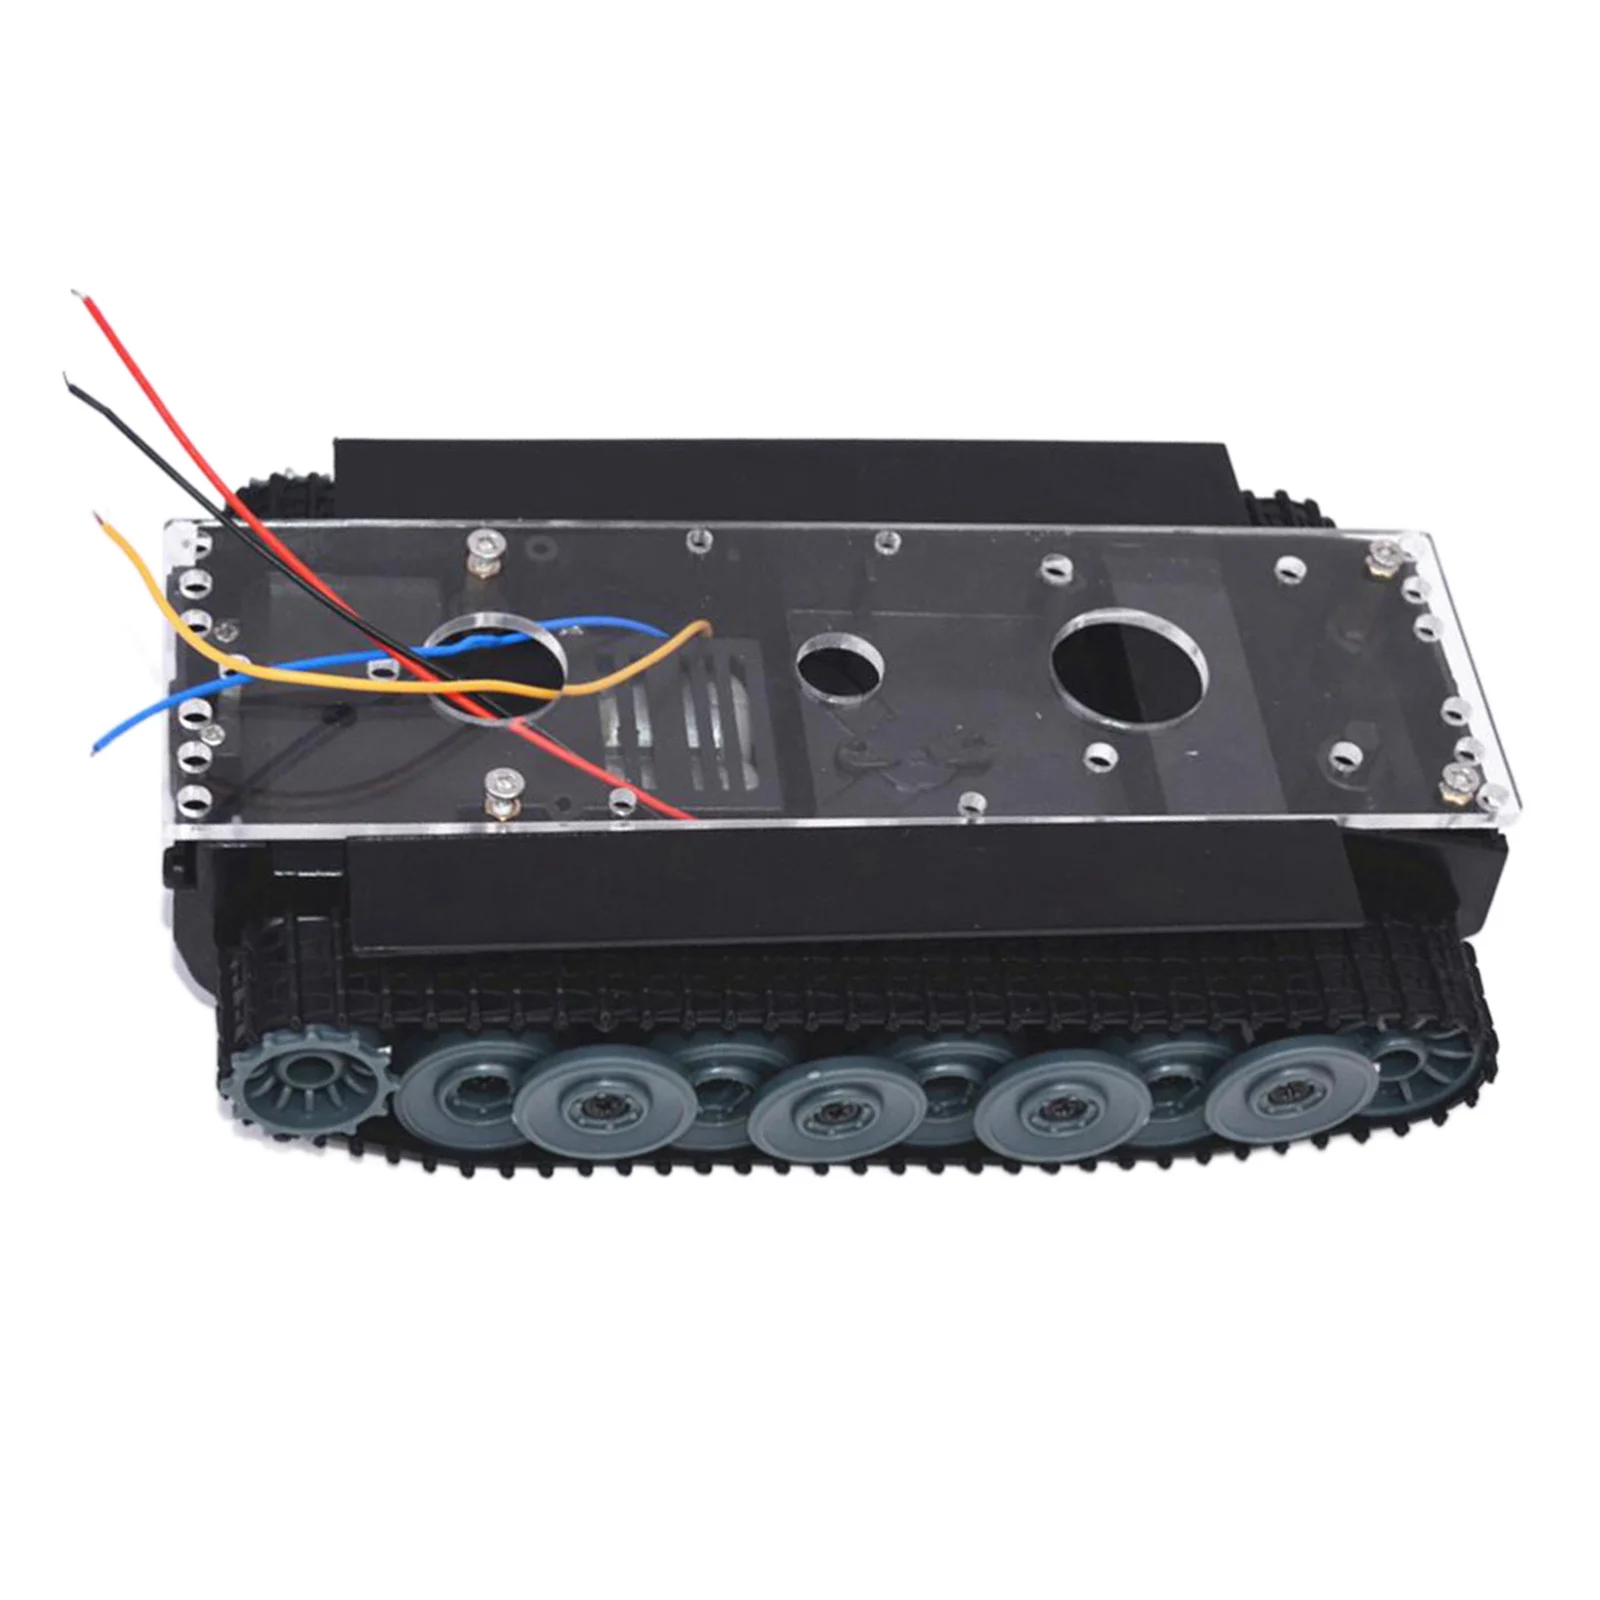 Professional Acrylic 1/32 Smart Robot RC Tank Car Chassis Kit Crawler Track DIY Education Platform Chassis Kit